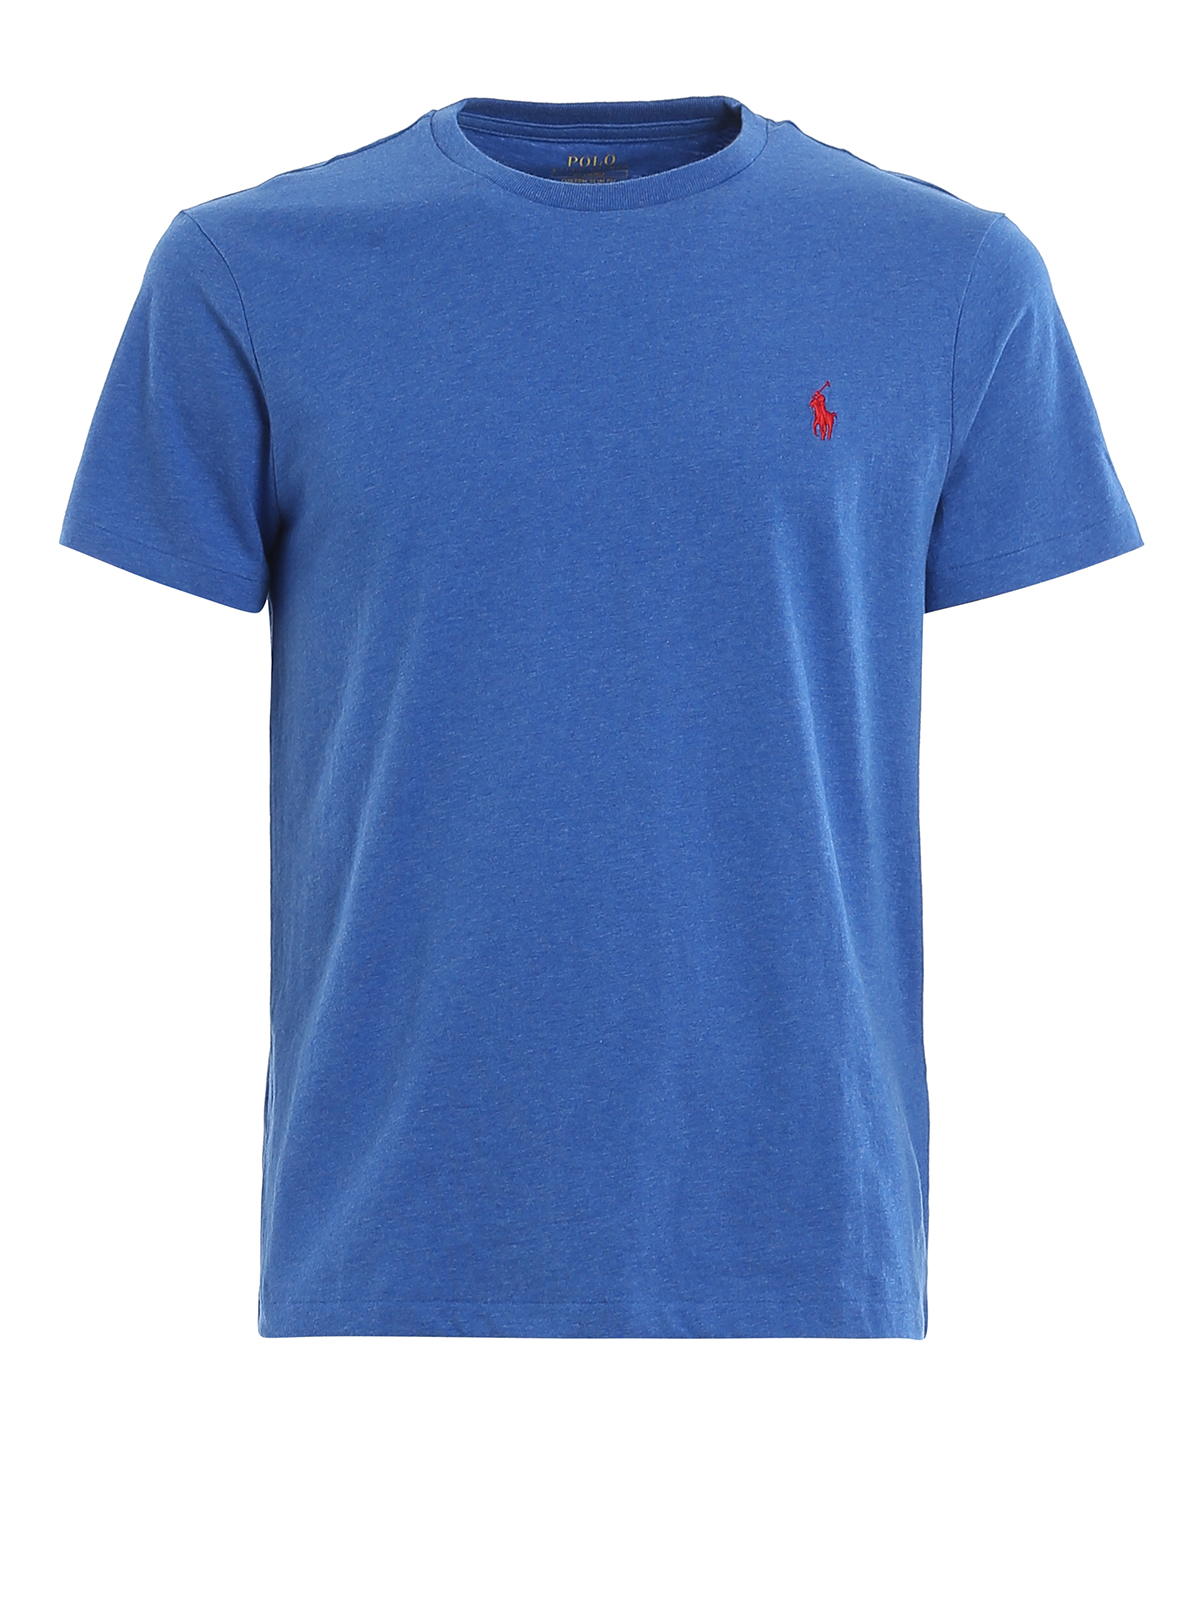 orden pala cristiano Camisetas Polo Ralph Lauren - Camiseta - Azul - 710671438126 | iKRIX.com